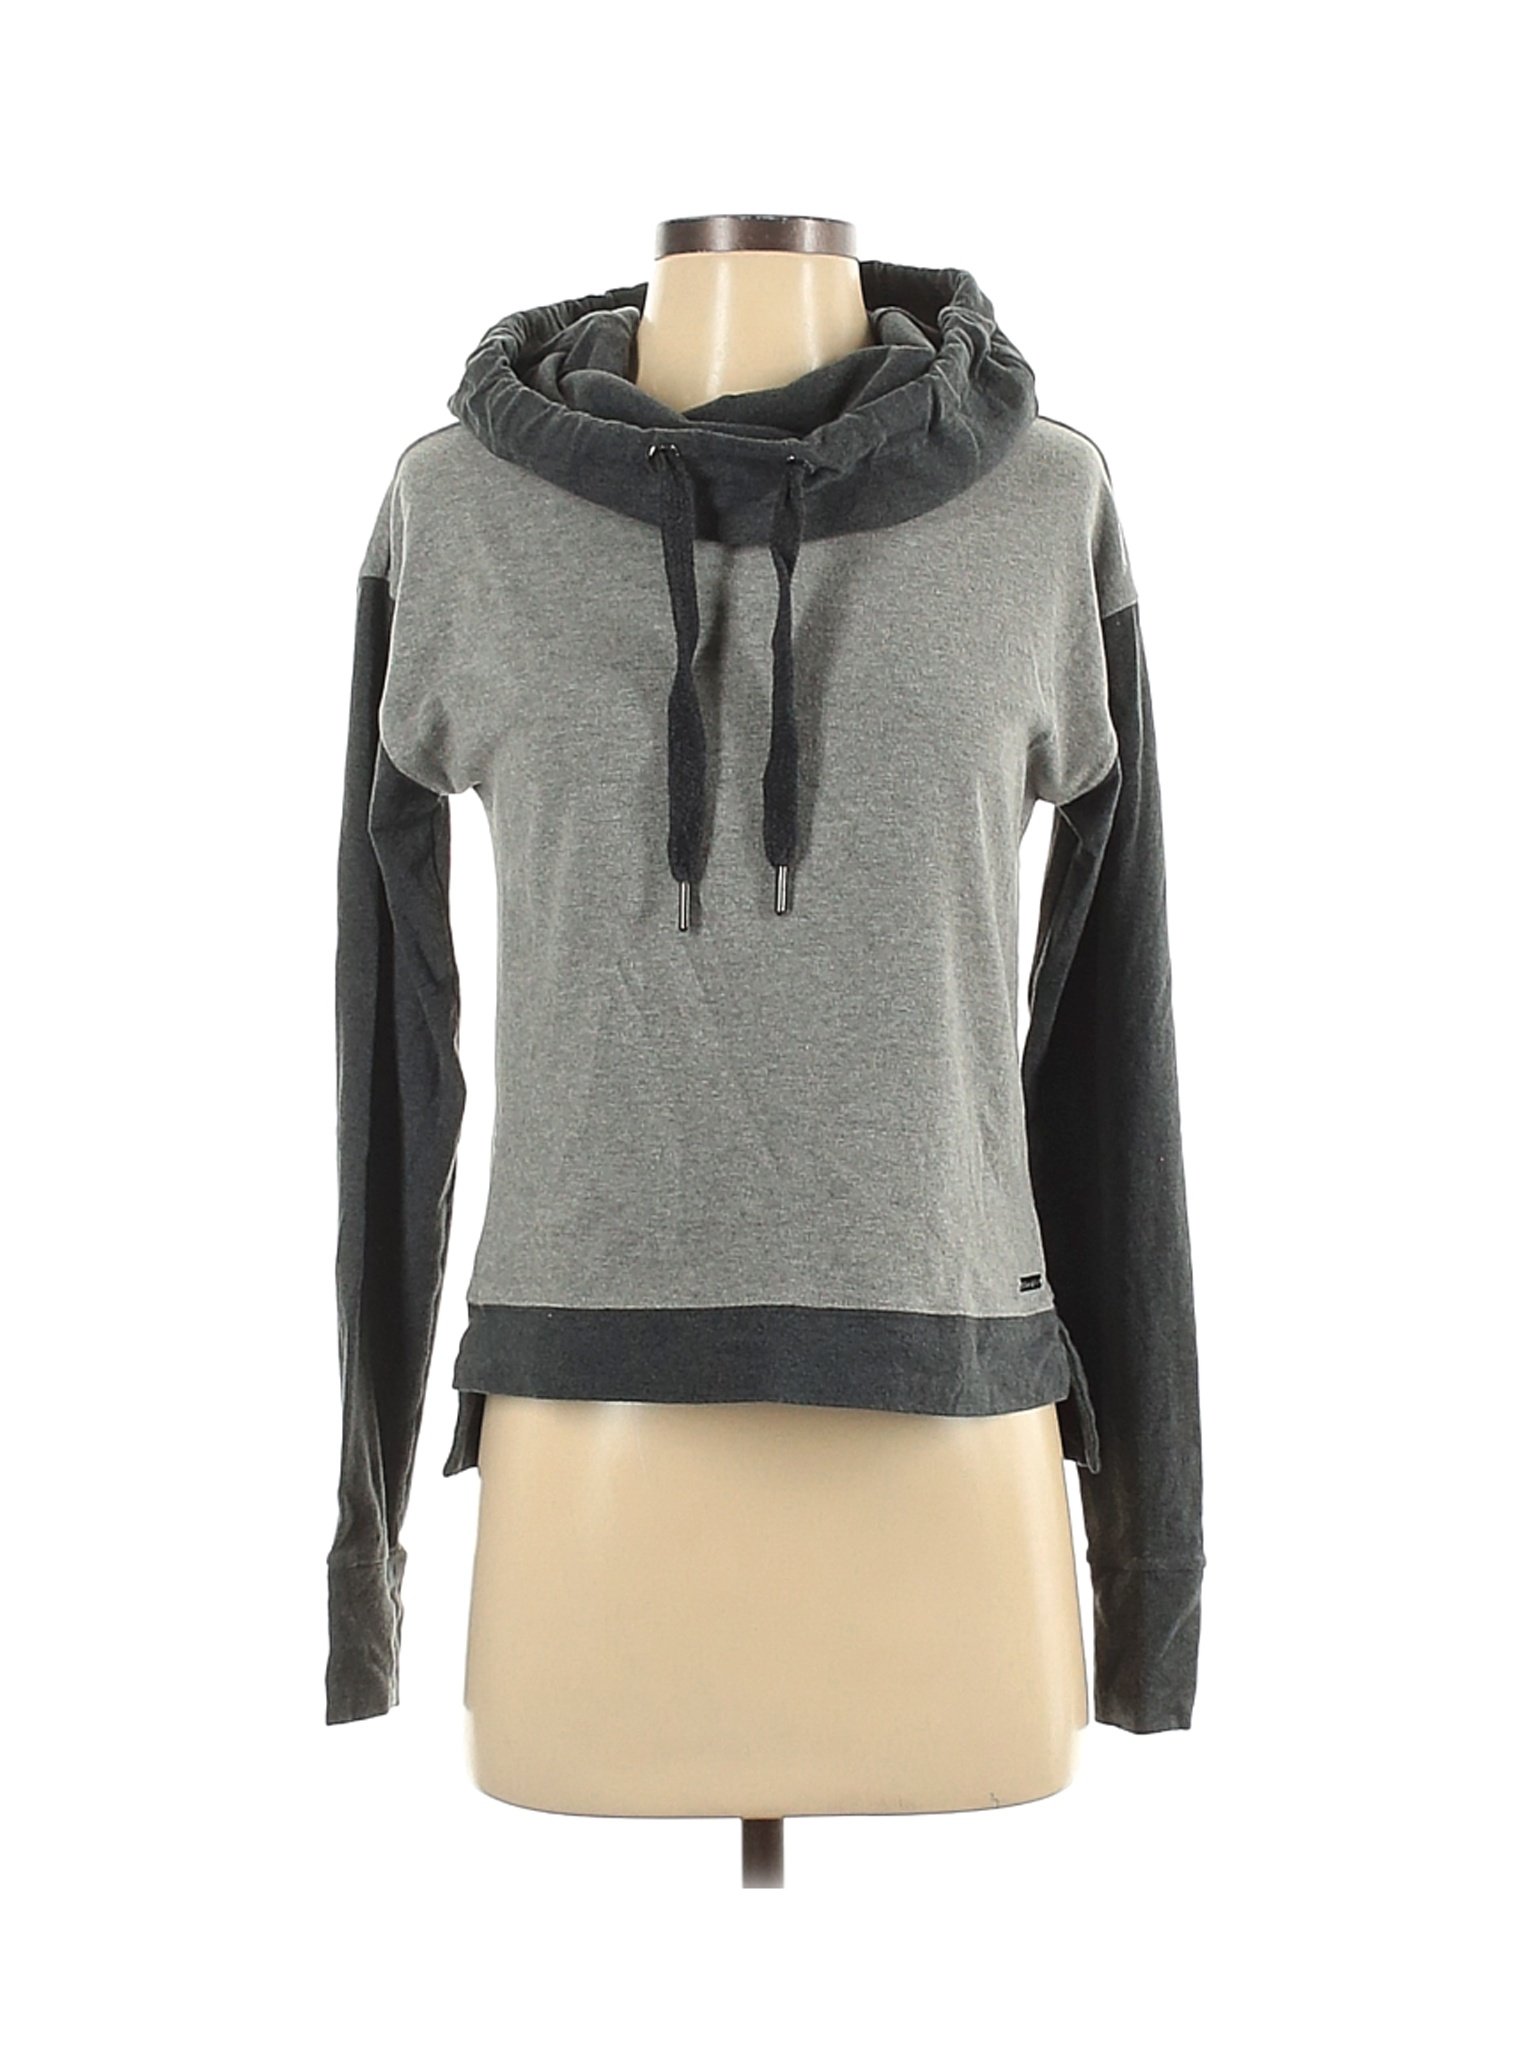 Sweaty Betty Women Gray Sweatshirt XS | eBay